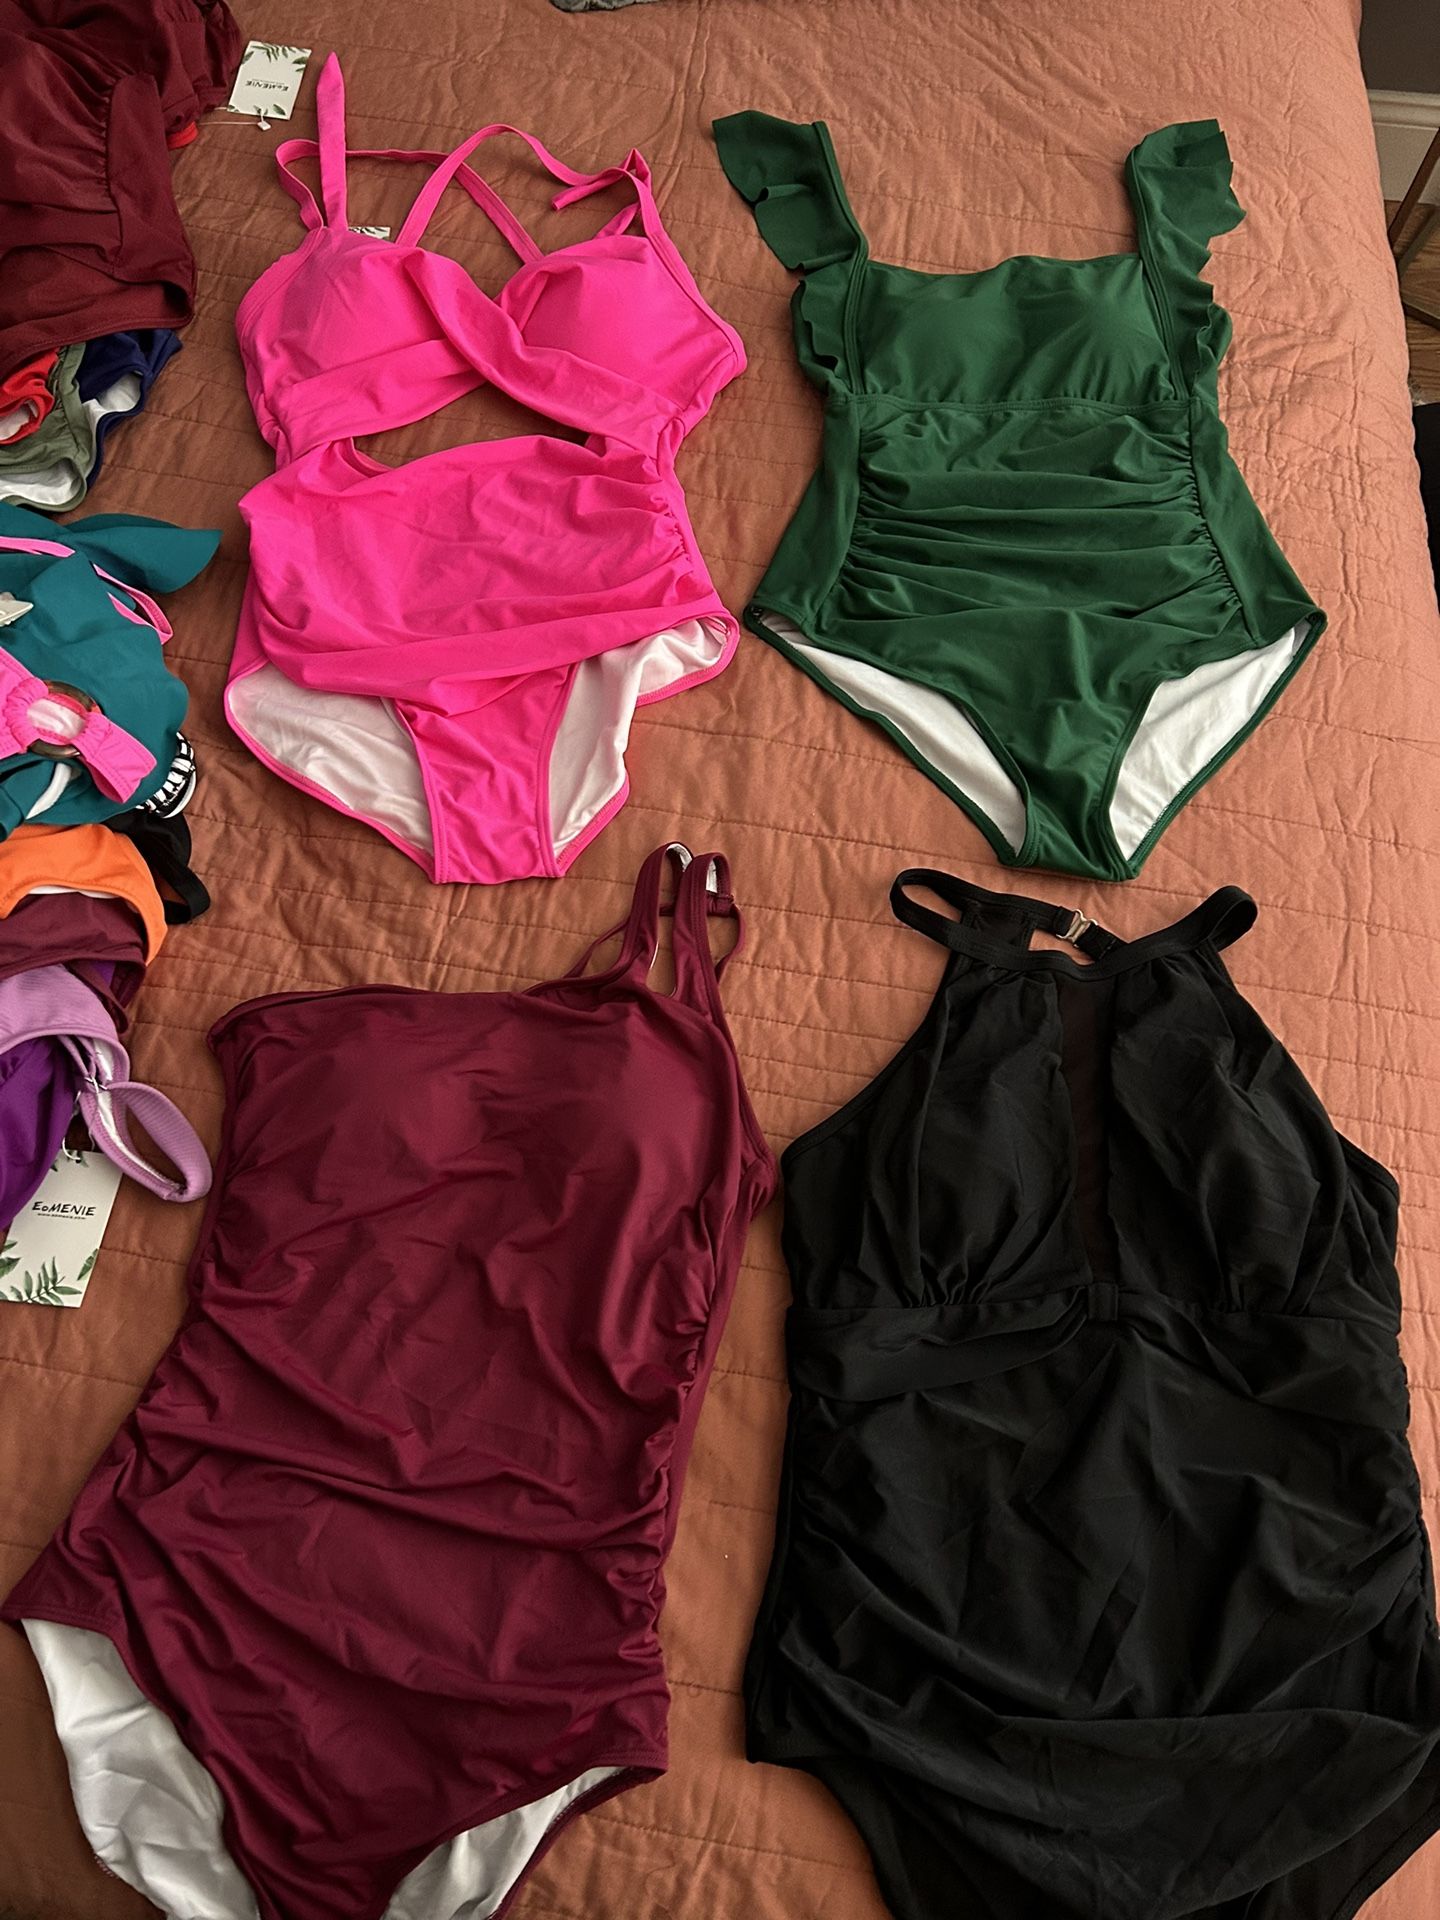 Bikinis / Swim Suit Size Large 